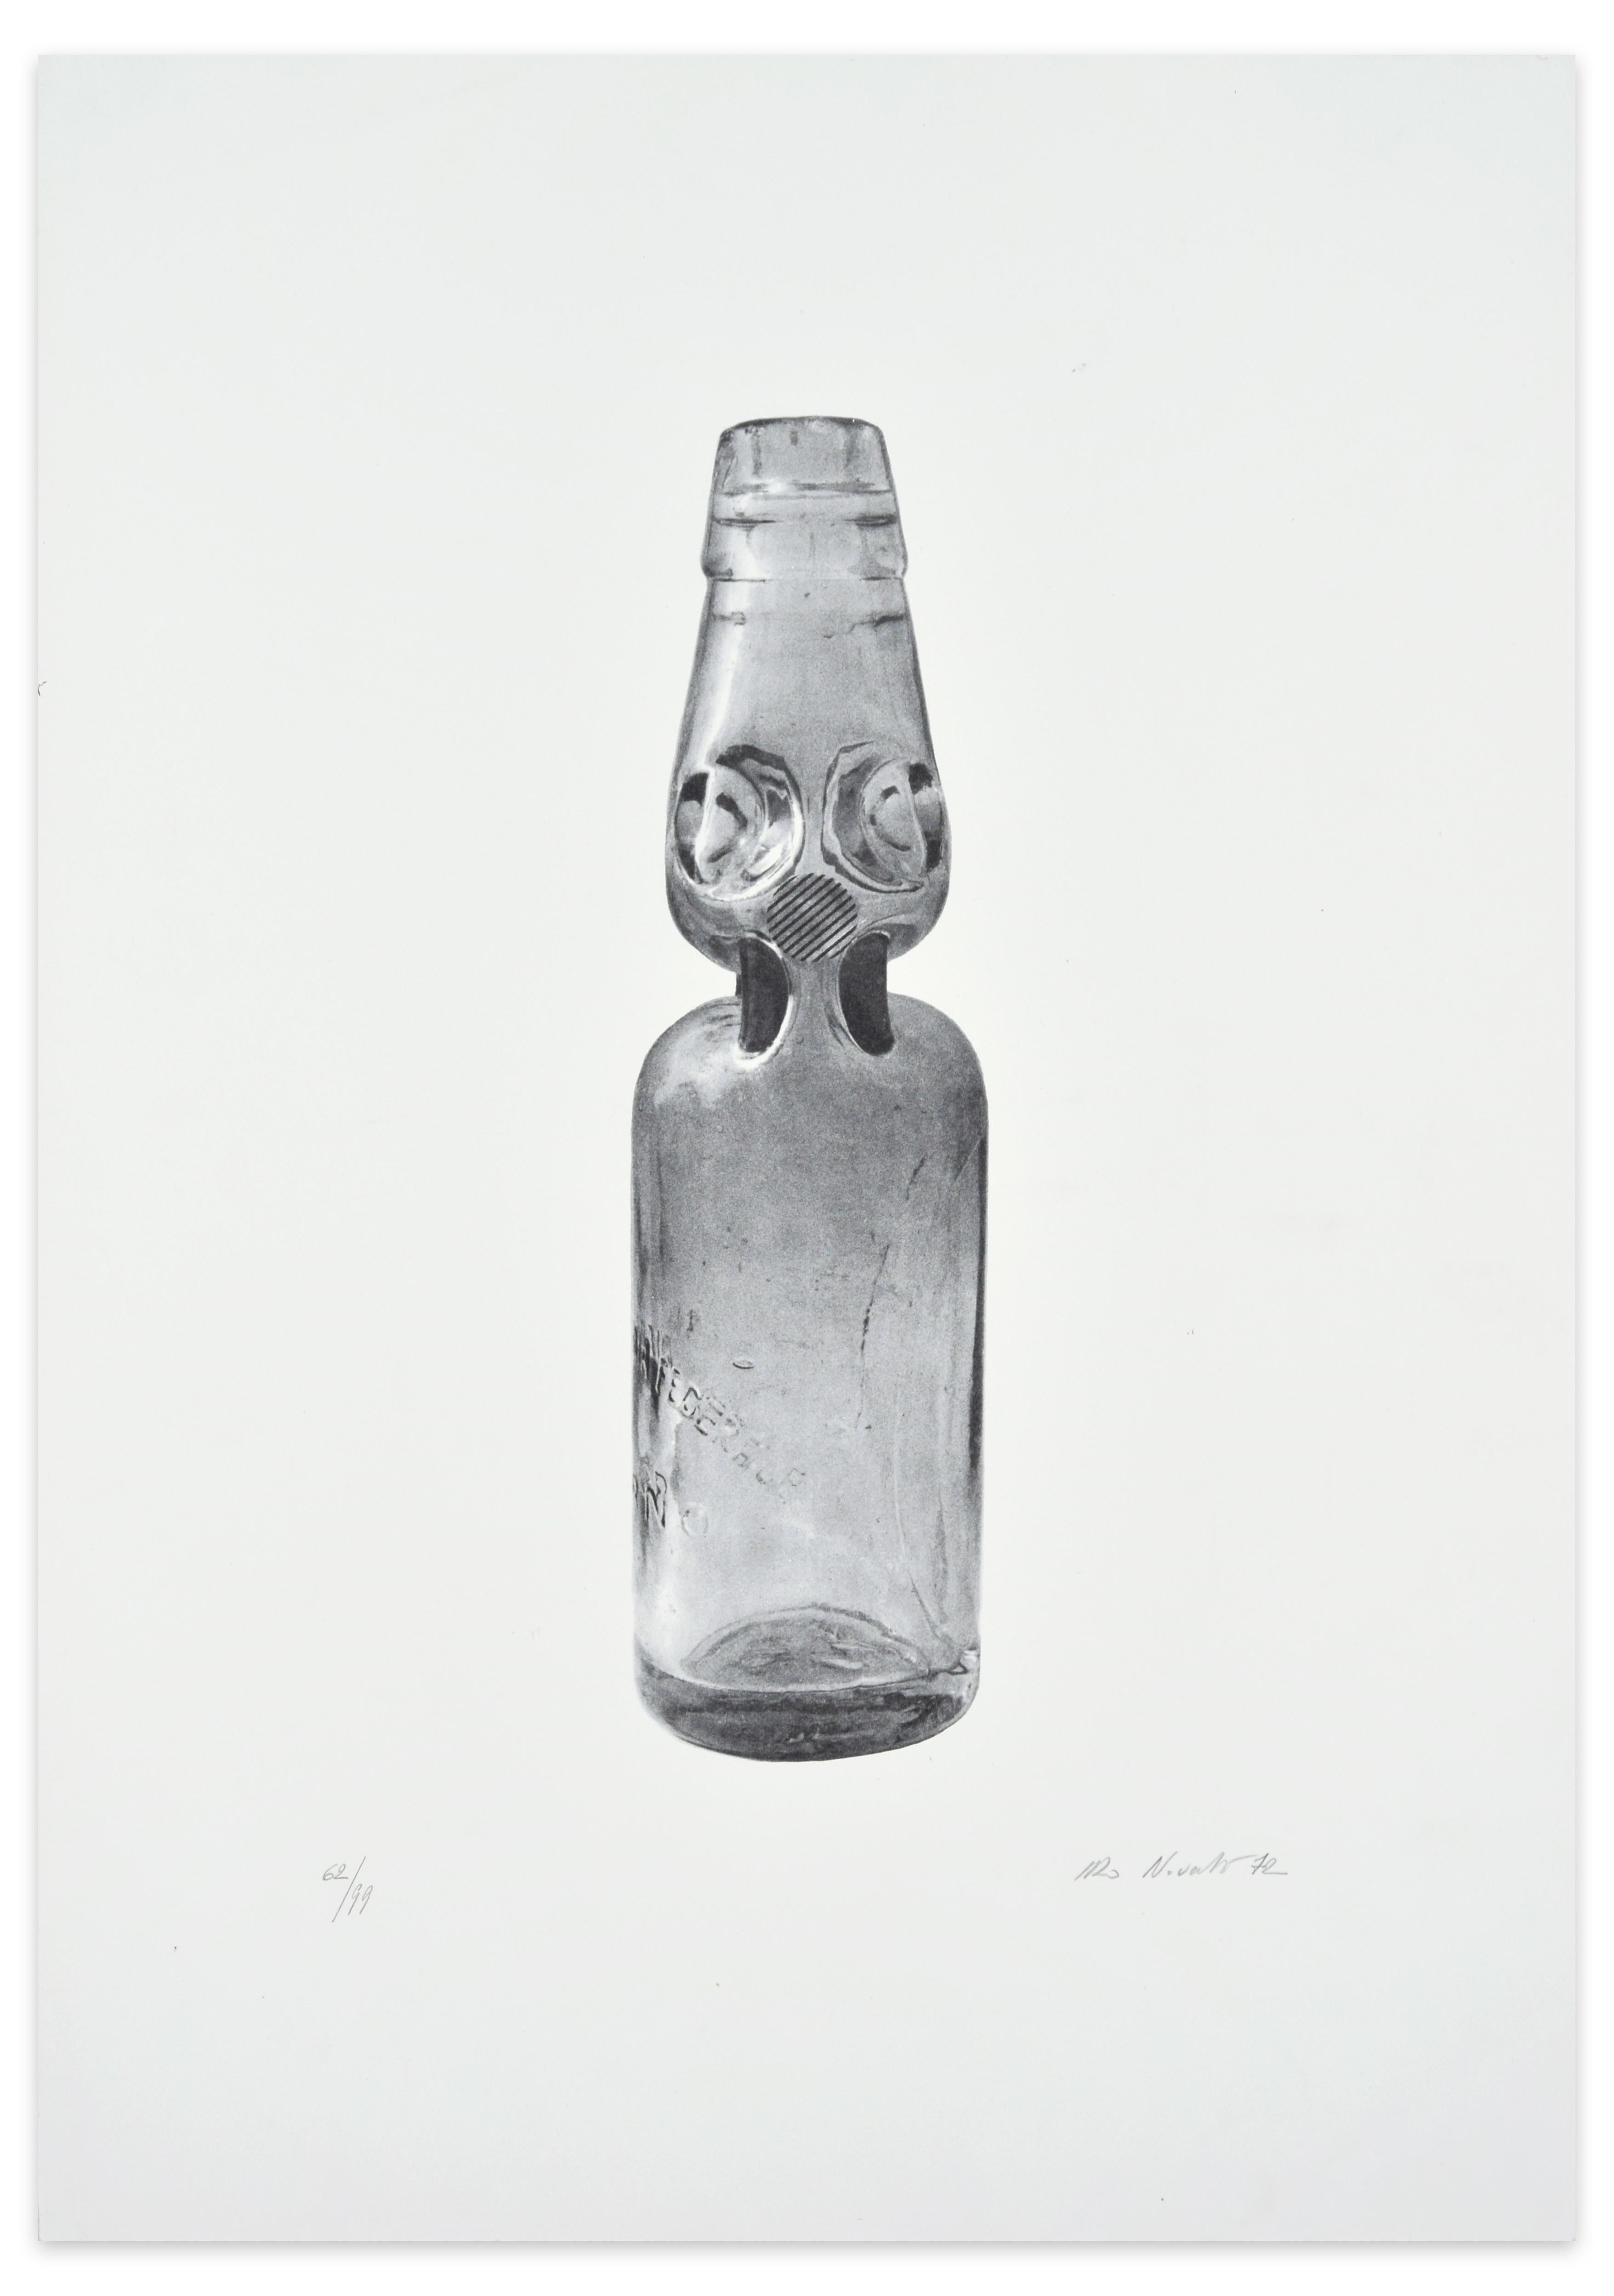 Ivan Novak Figurative Print - Glass Bottle - Original Photolithograph by I. Novak - 1972